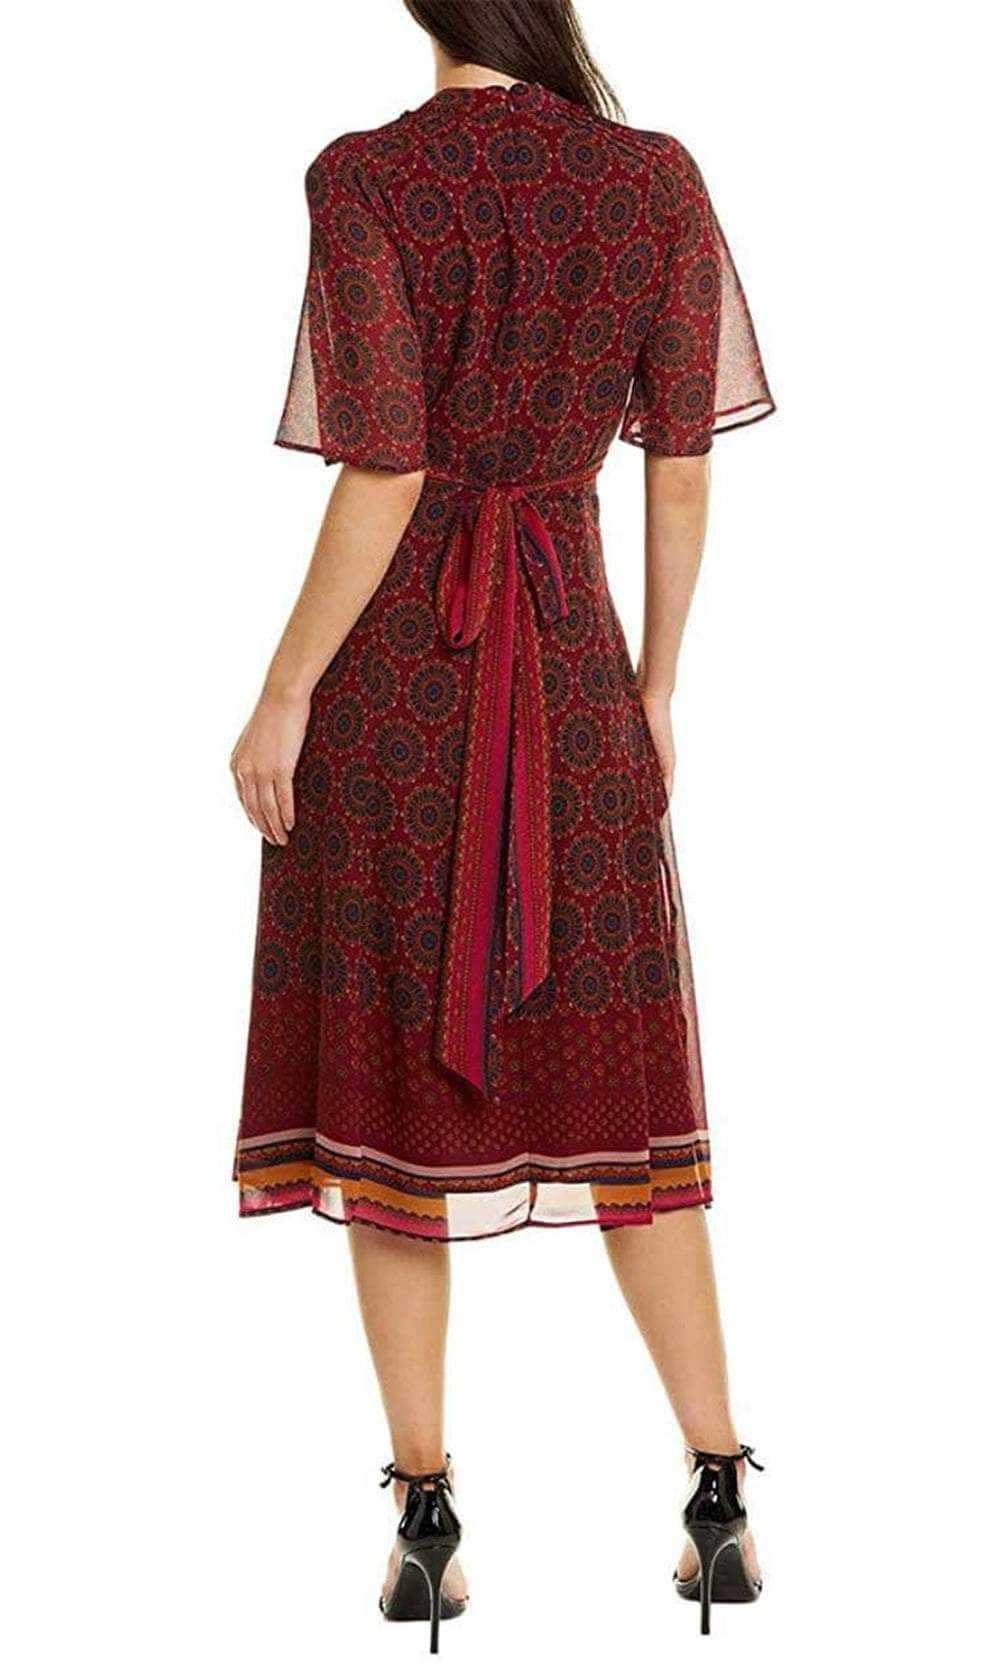 Taylor, Taylor 1575M - Collared V-Neck Short Sleeved Printed Chiffon Dress